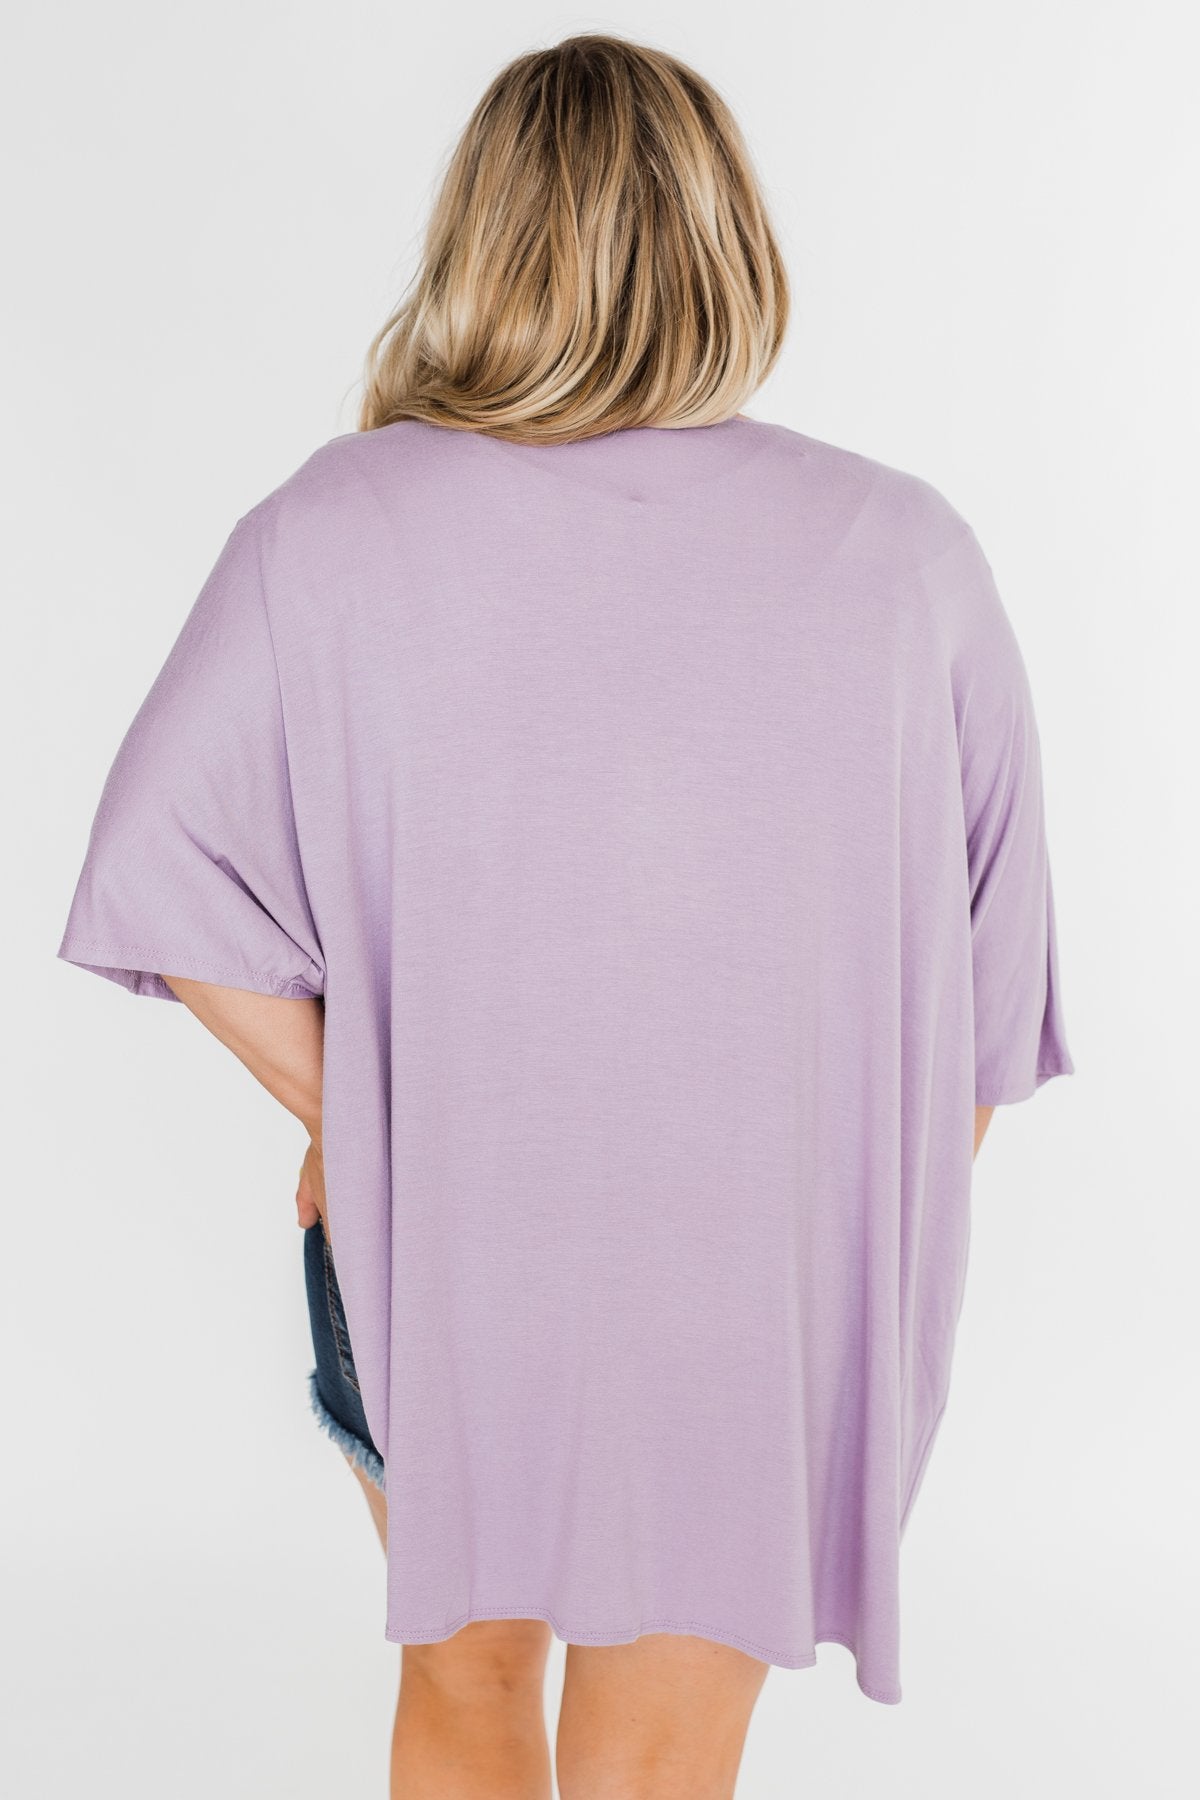 Need For You Short Sleeve Kimono- Light Purple